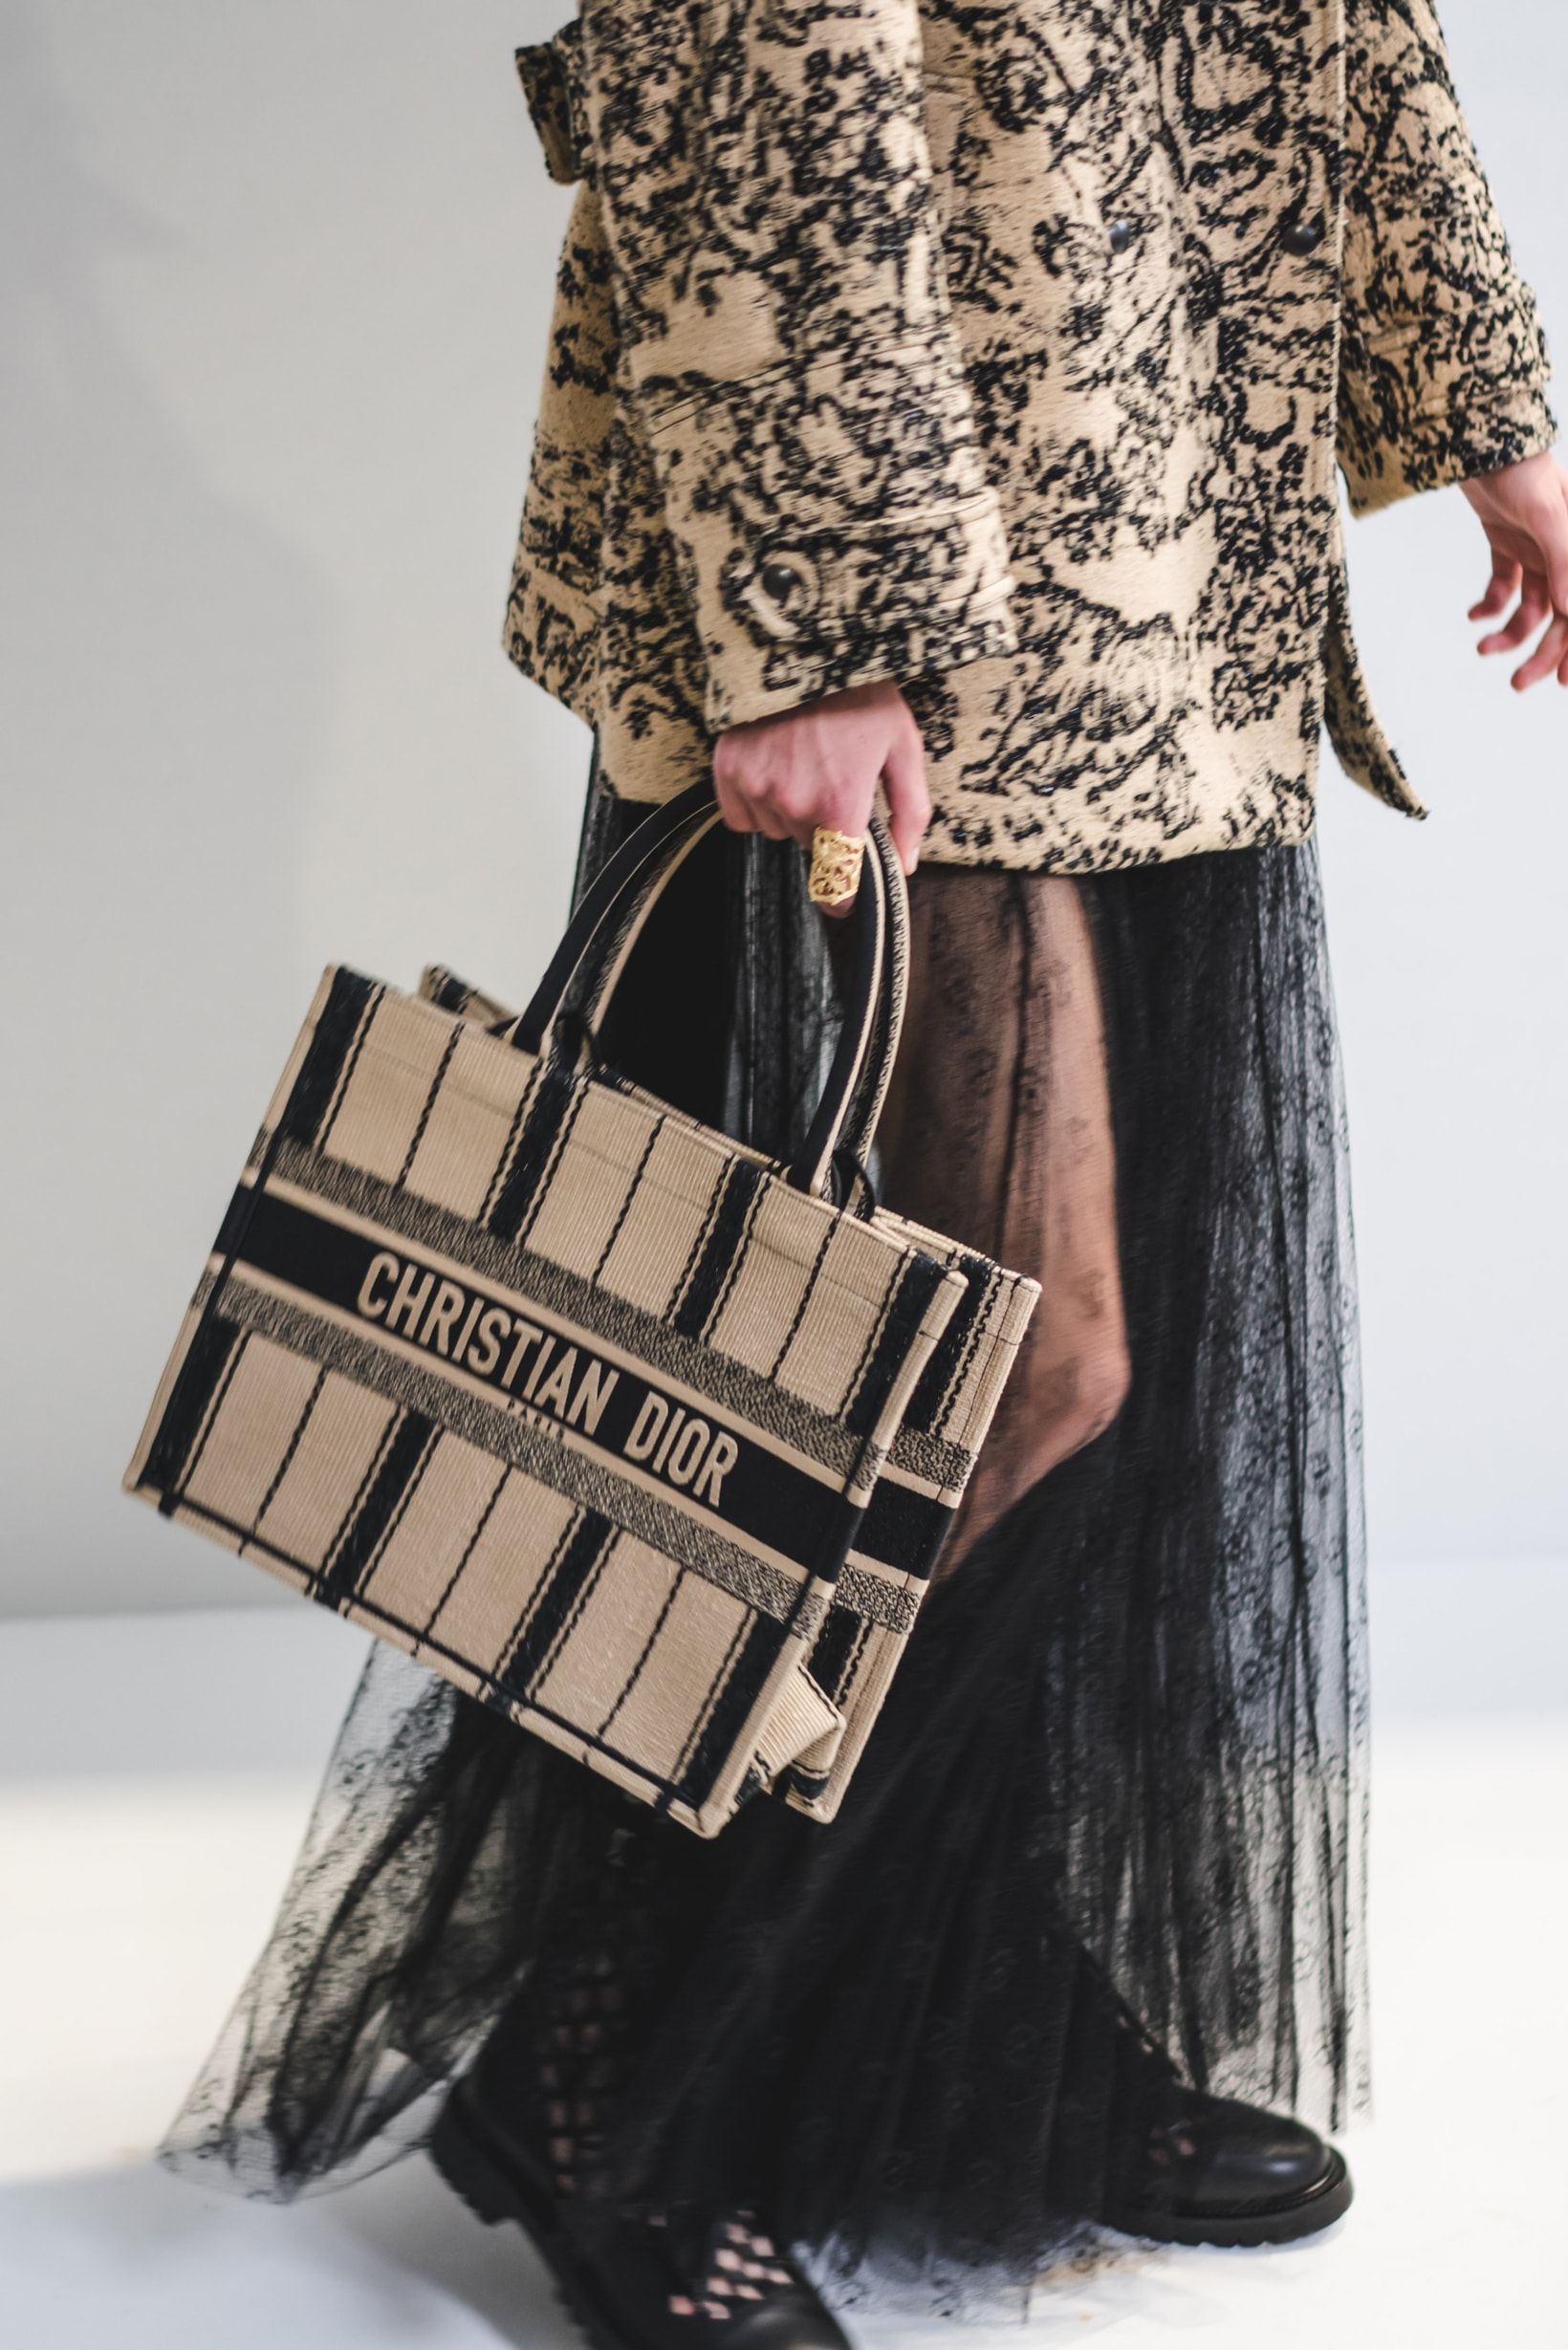 Dior Spring Summer 2020 Paris Fashion Week Collection Show Backstage Look Bag Tan Skirt Black